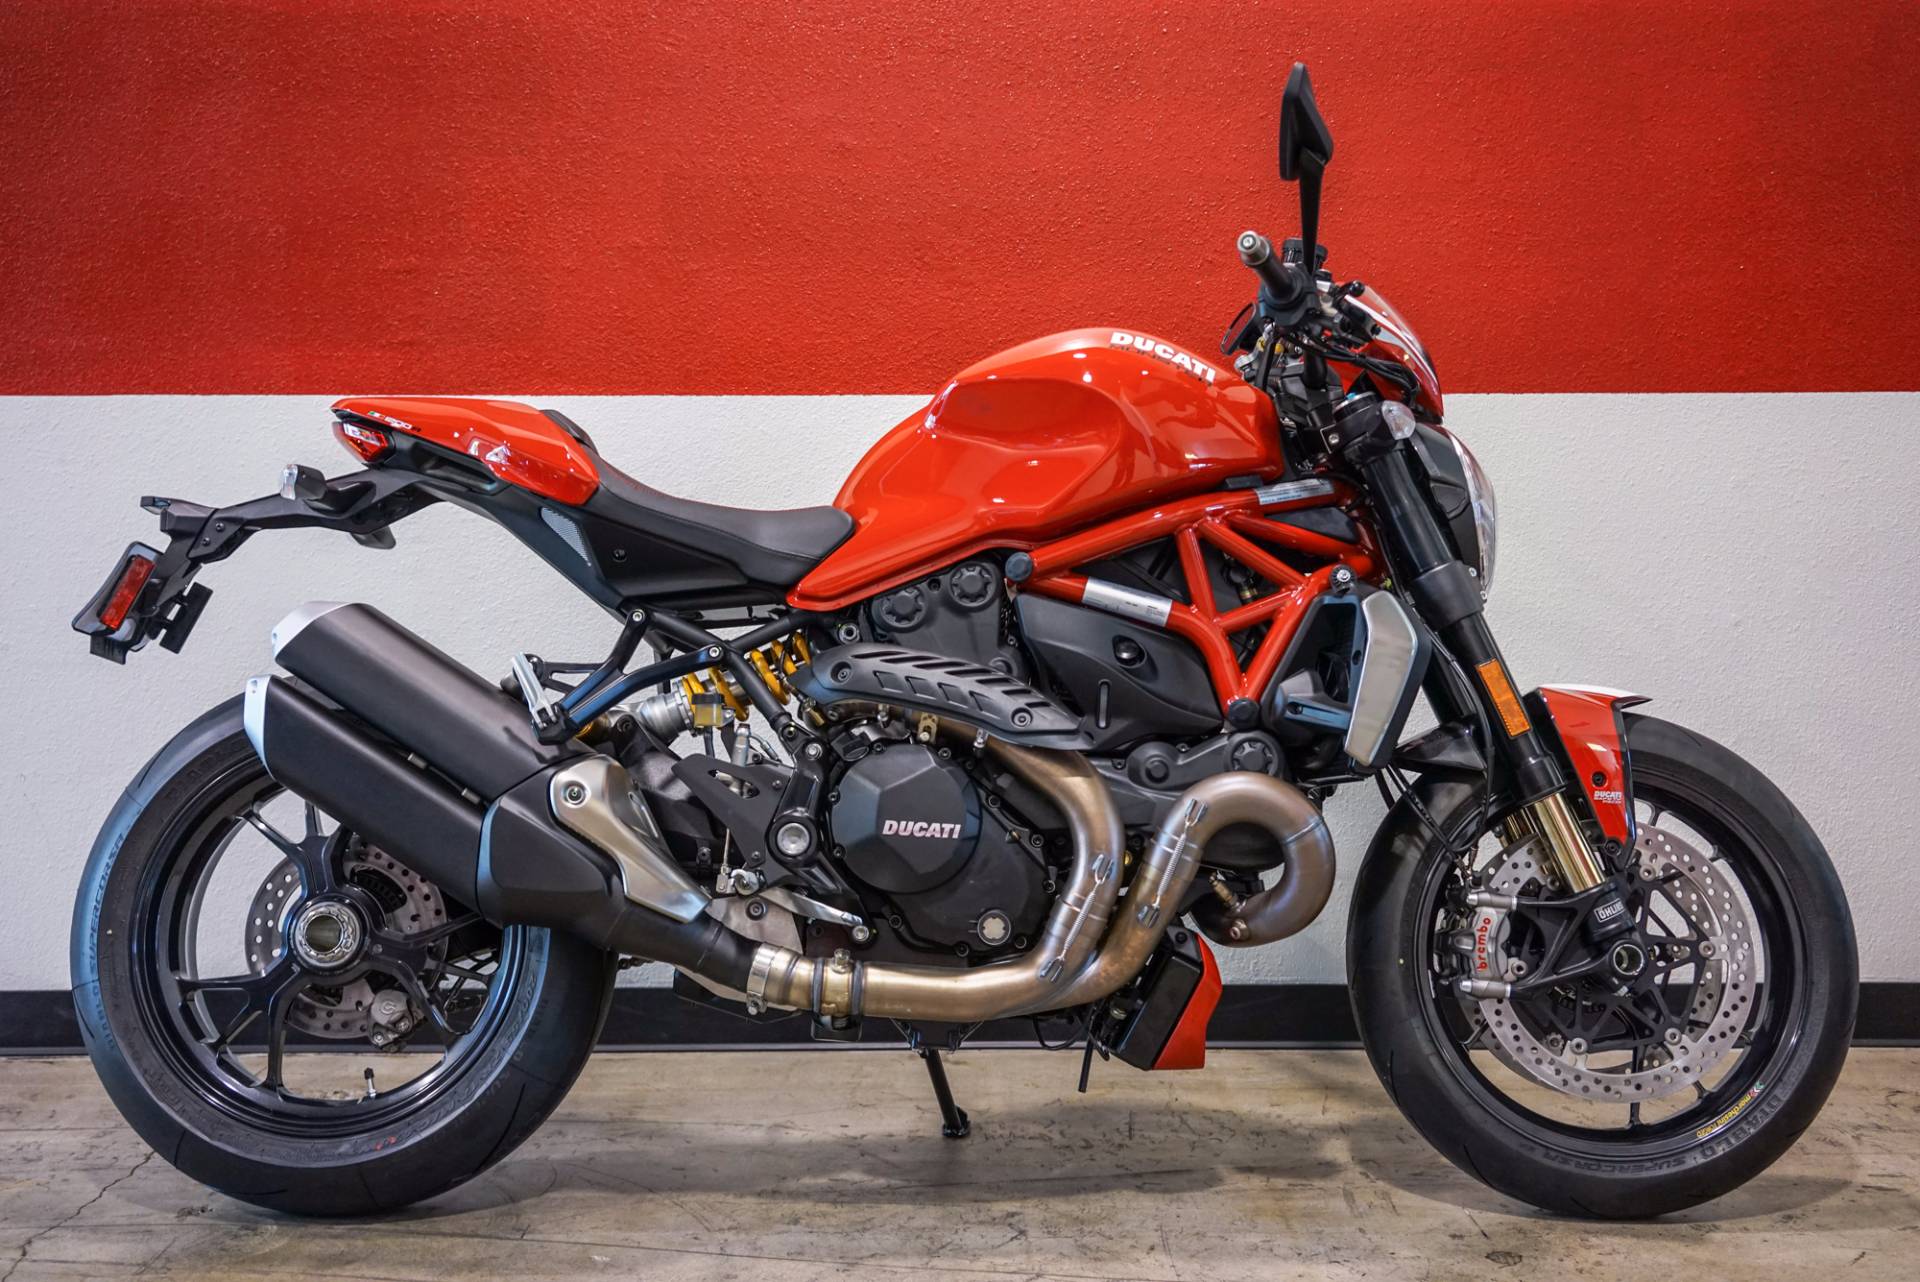 Ducati Monster 1200 R 2018 photo - 1